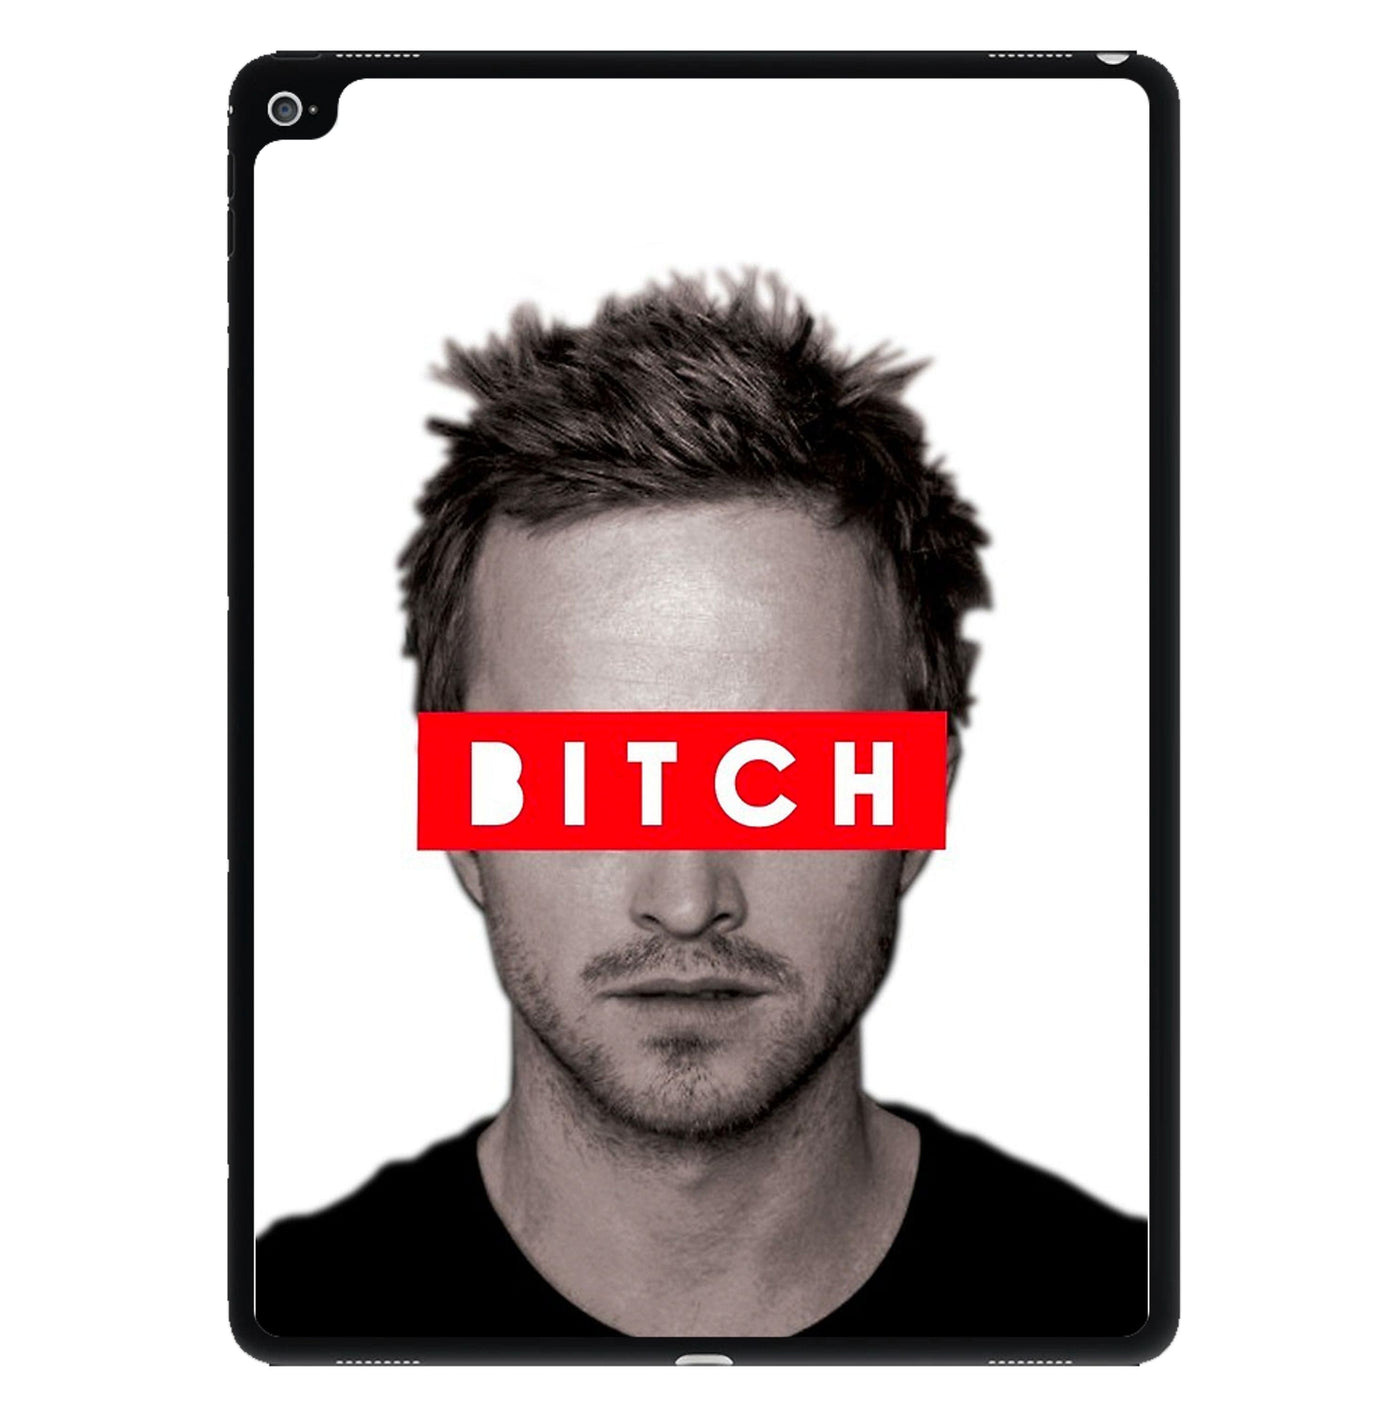 Jesse Pinkman - Bitch. - Breaking Bad iPad Case